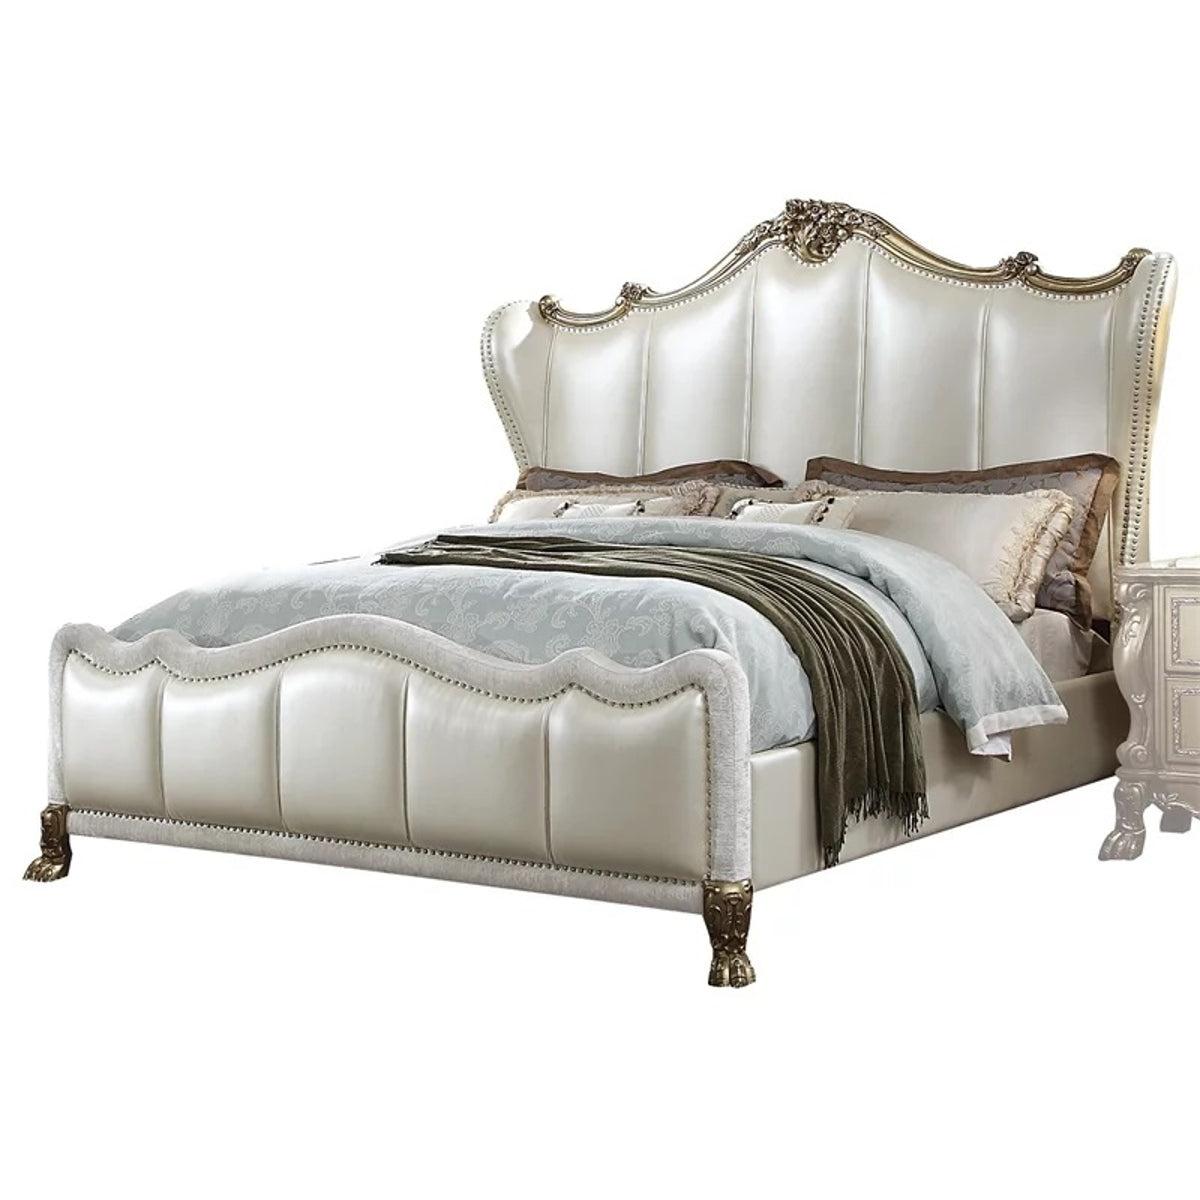 Acme Furniture Dresden II California King Bed in Pearl White PU & Gold Patina 27814CK  Half Price Furniture